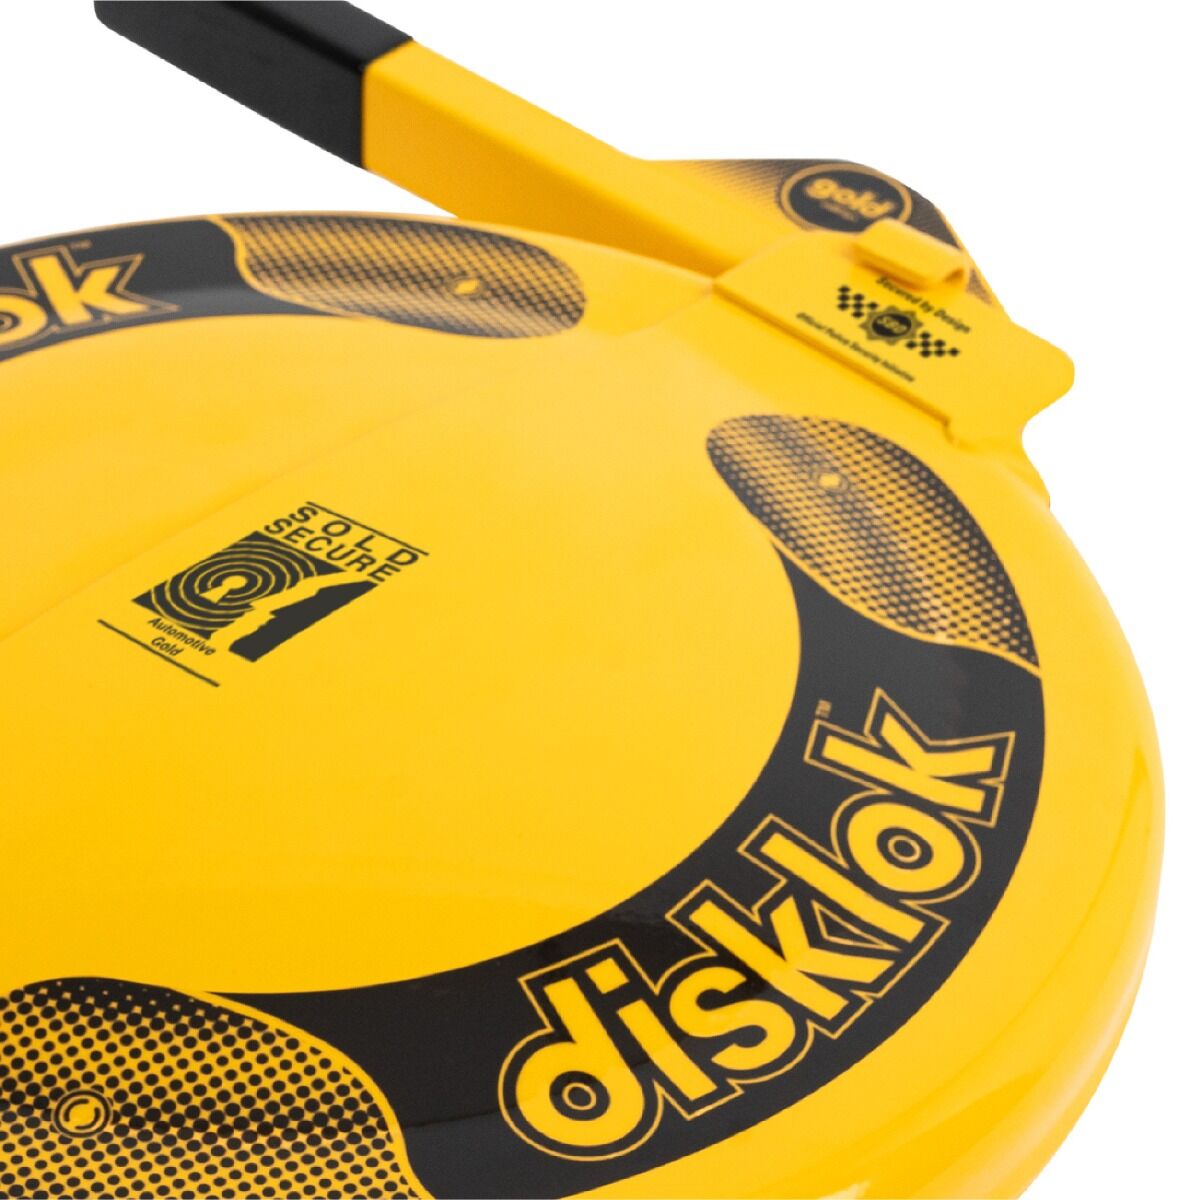 Disklok Gold Edition Medium Yellow Car Steering Wheel Lock image 7